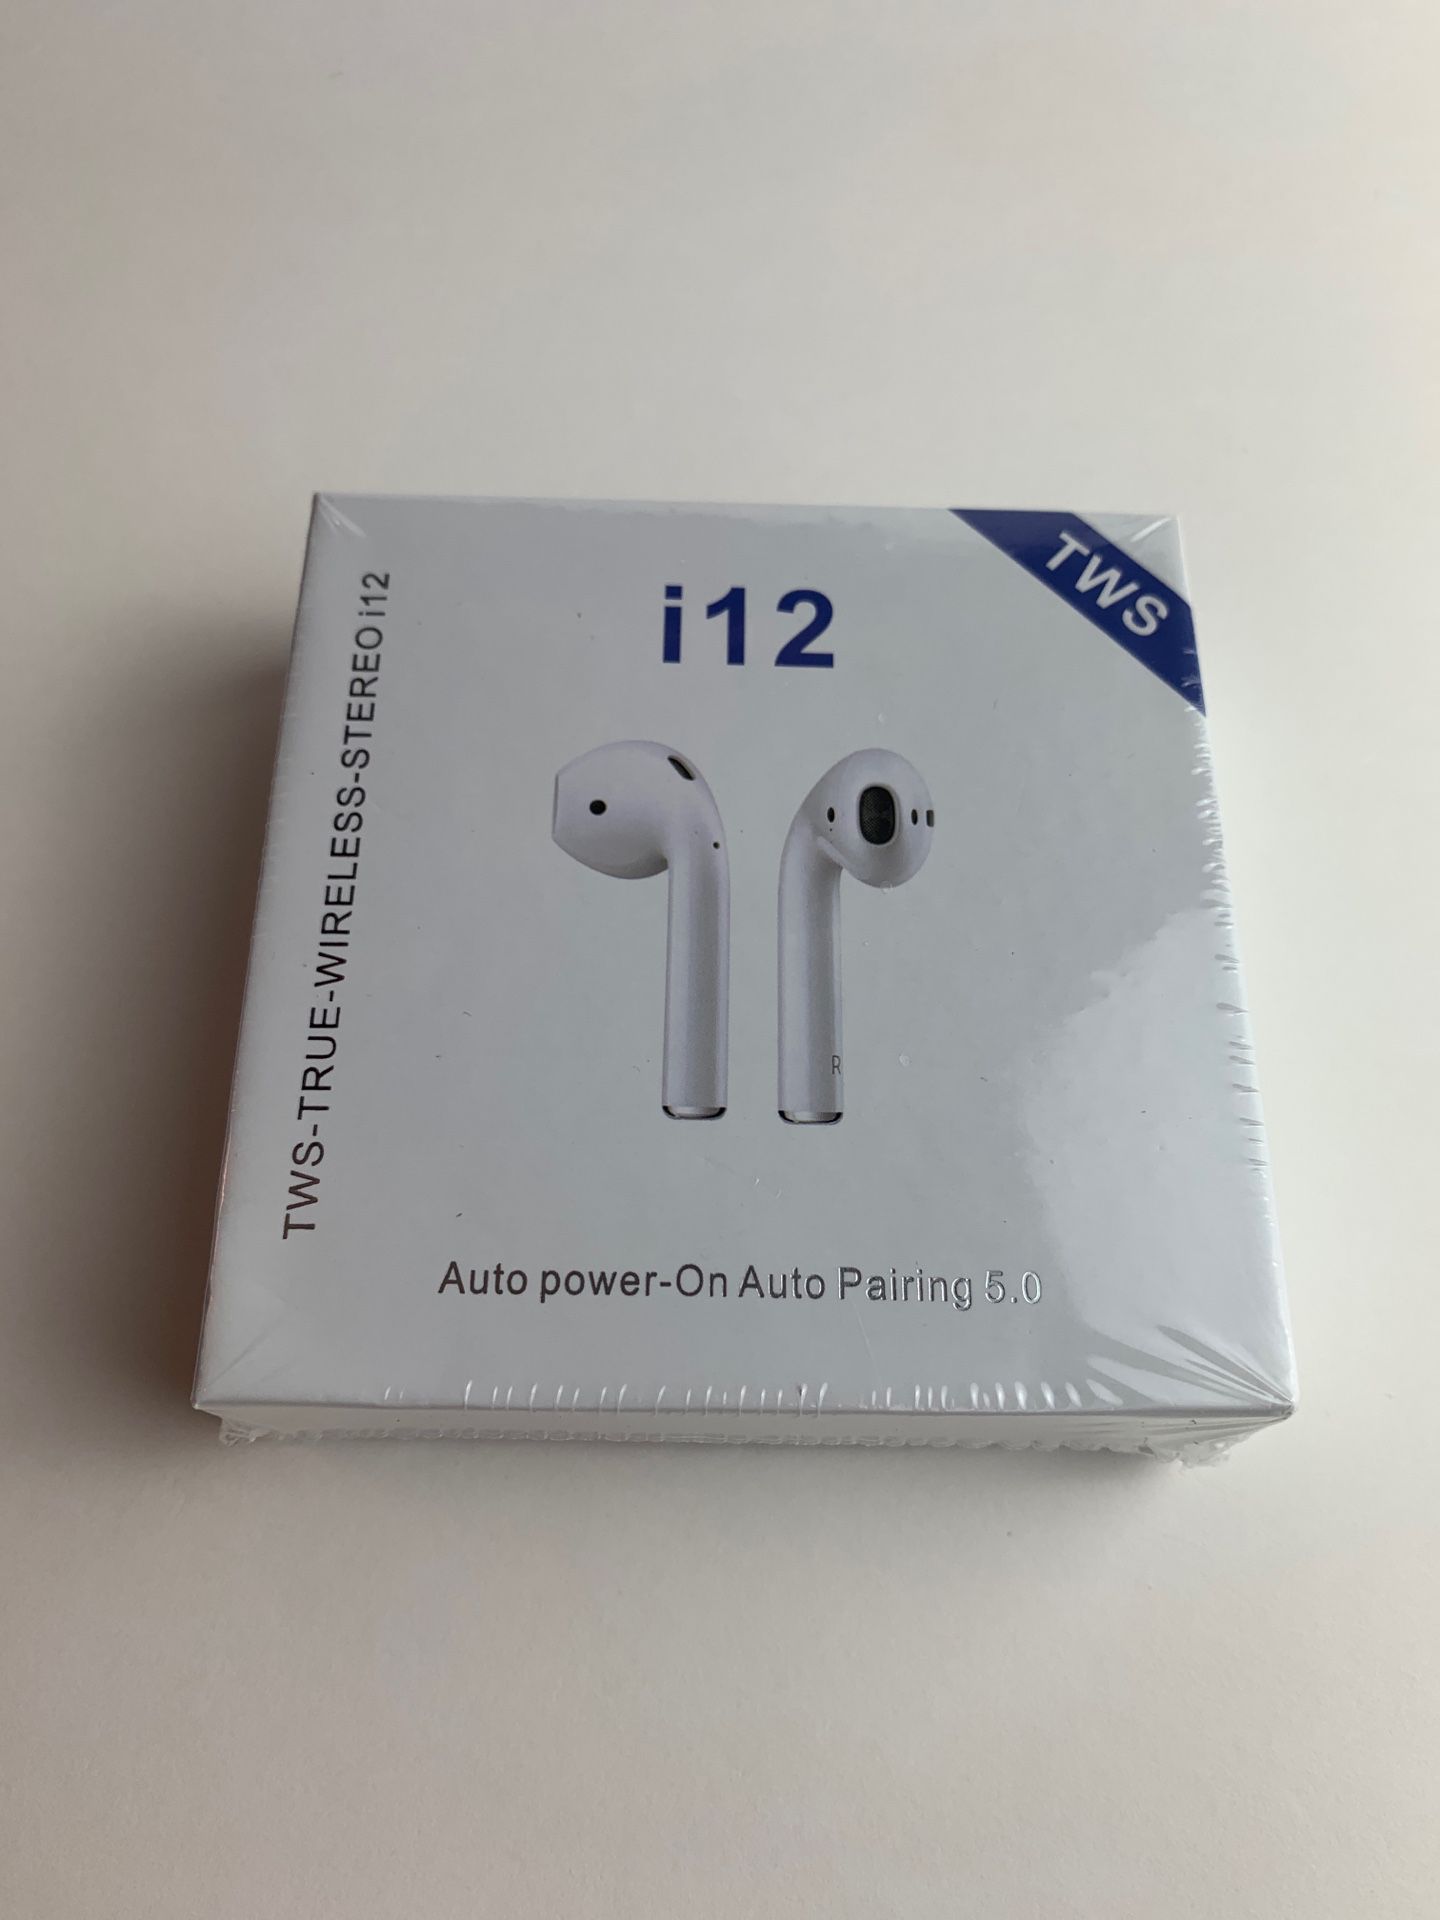 i12 tws bluetooth headphones (not Airpods)